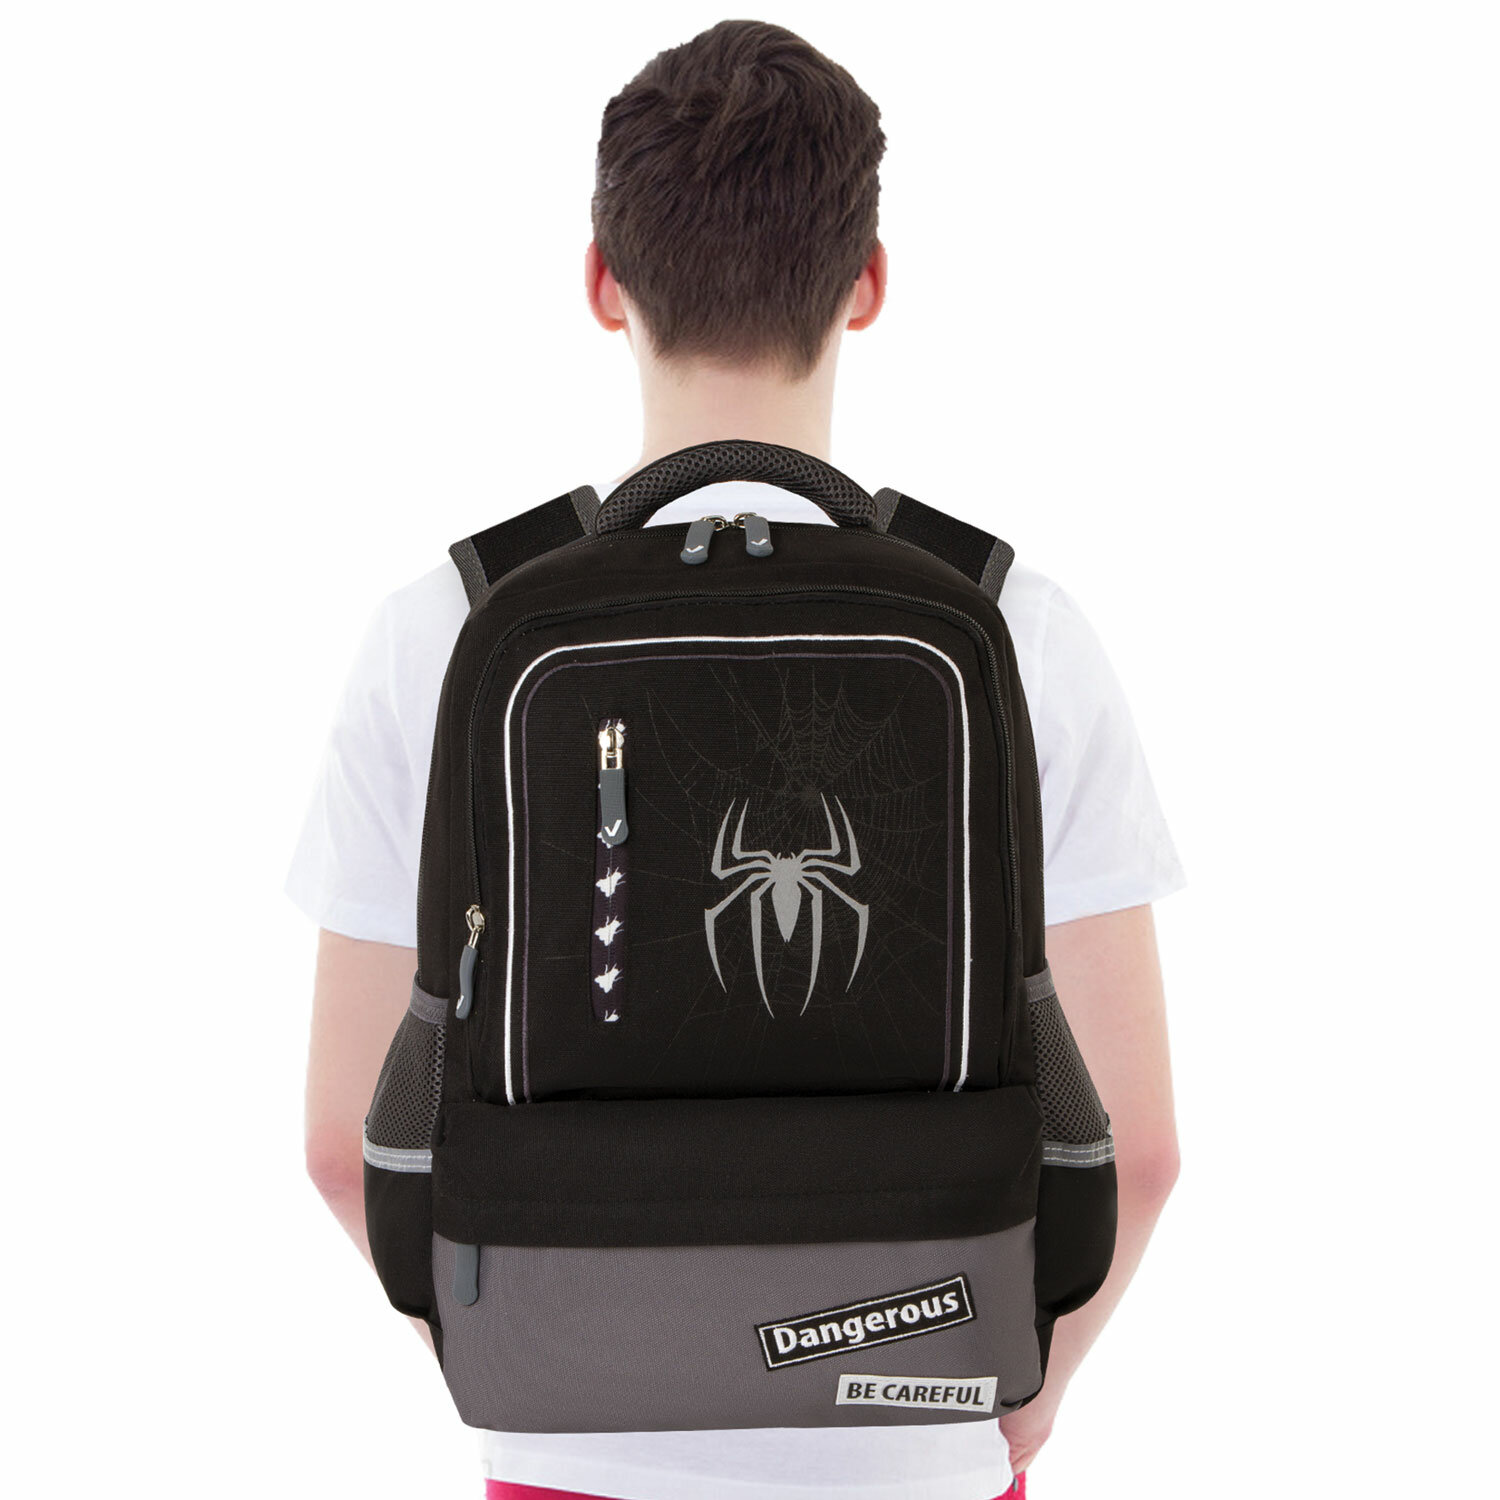 Рюкзак BRAUBERG STAR, "Spider", черный, 40х29х13 см, 229978